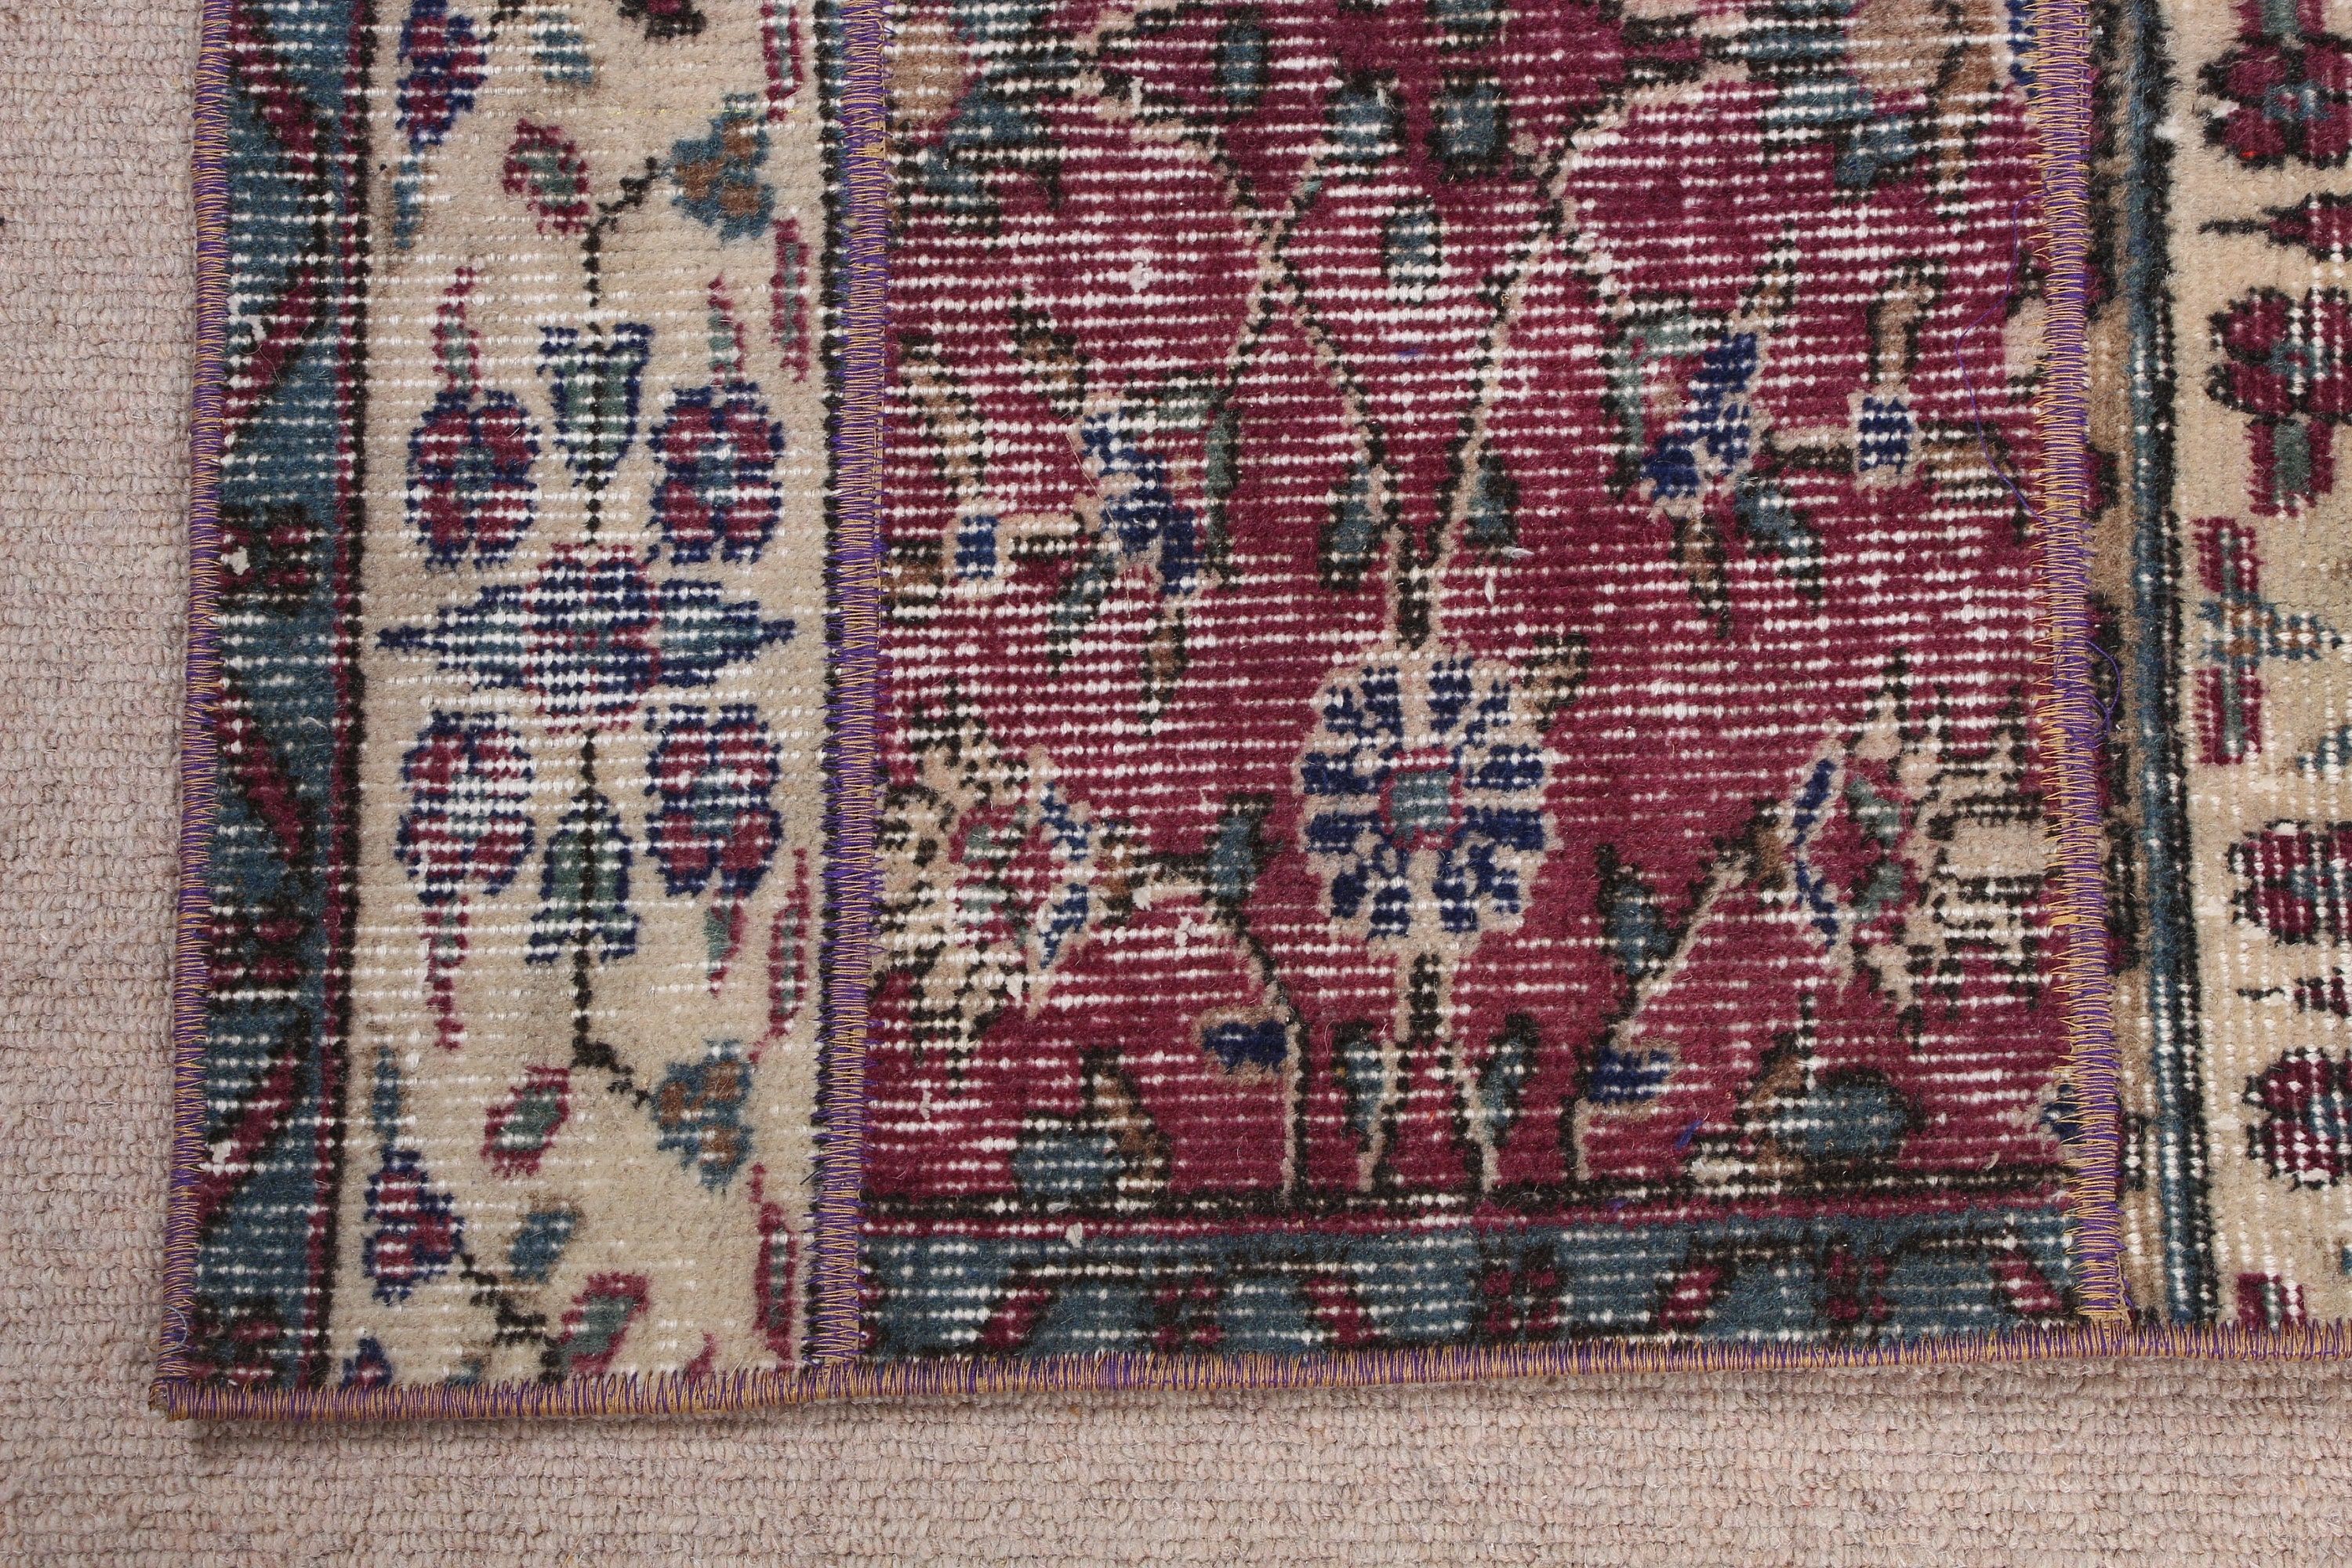 Rugs for Door Mat, Antique Rugs, Turkish Rugs, Bathroom Rug, Vintage Rugs, Purple Home Decor Rug, 2x3.9 ft Small Rug